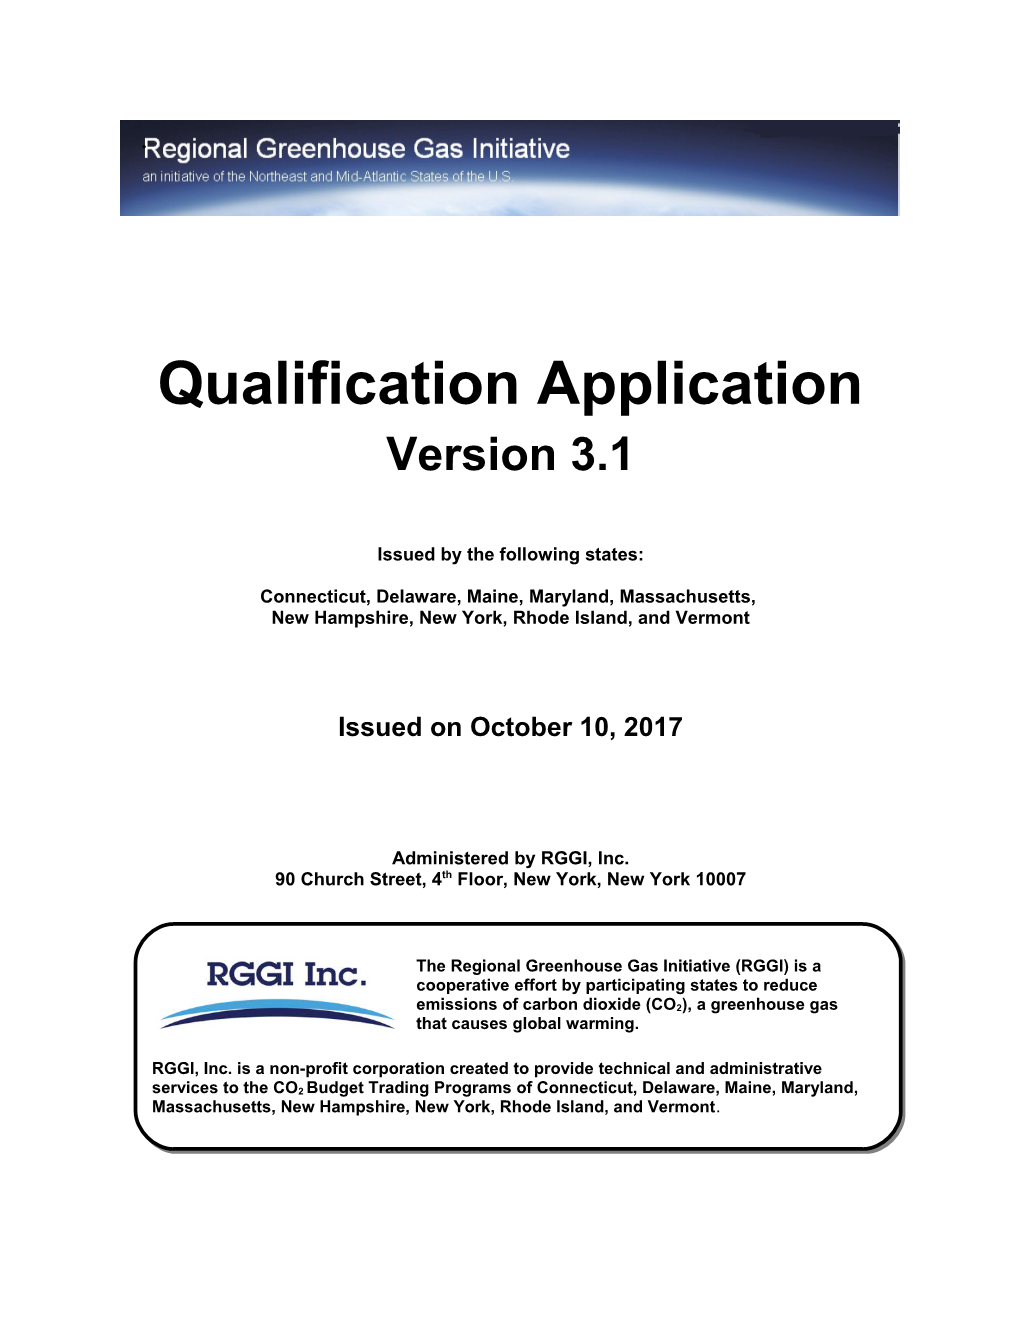 RGGI Qualification Application